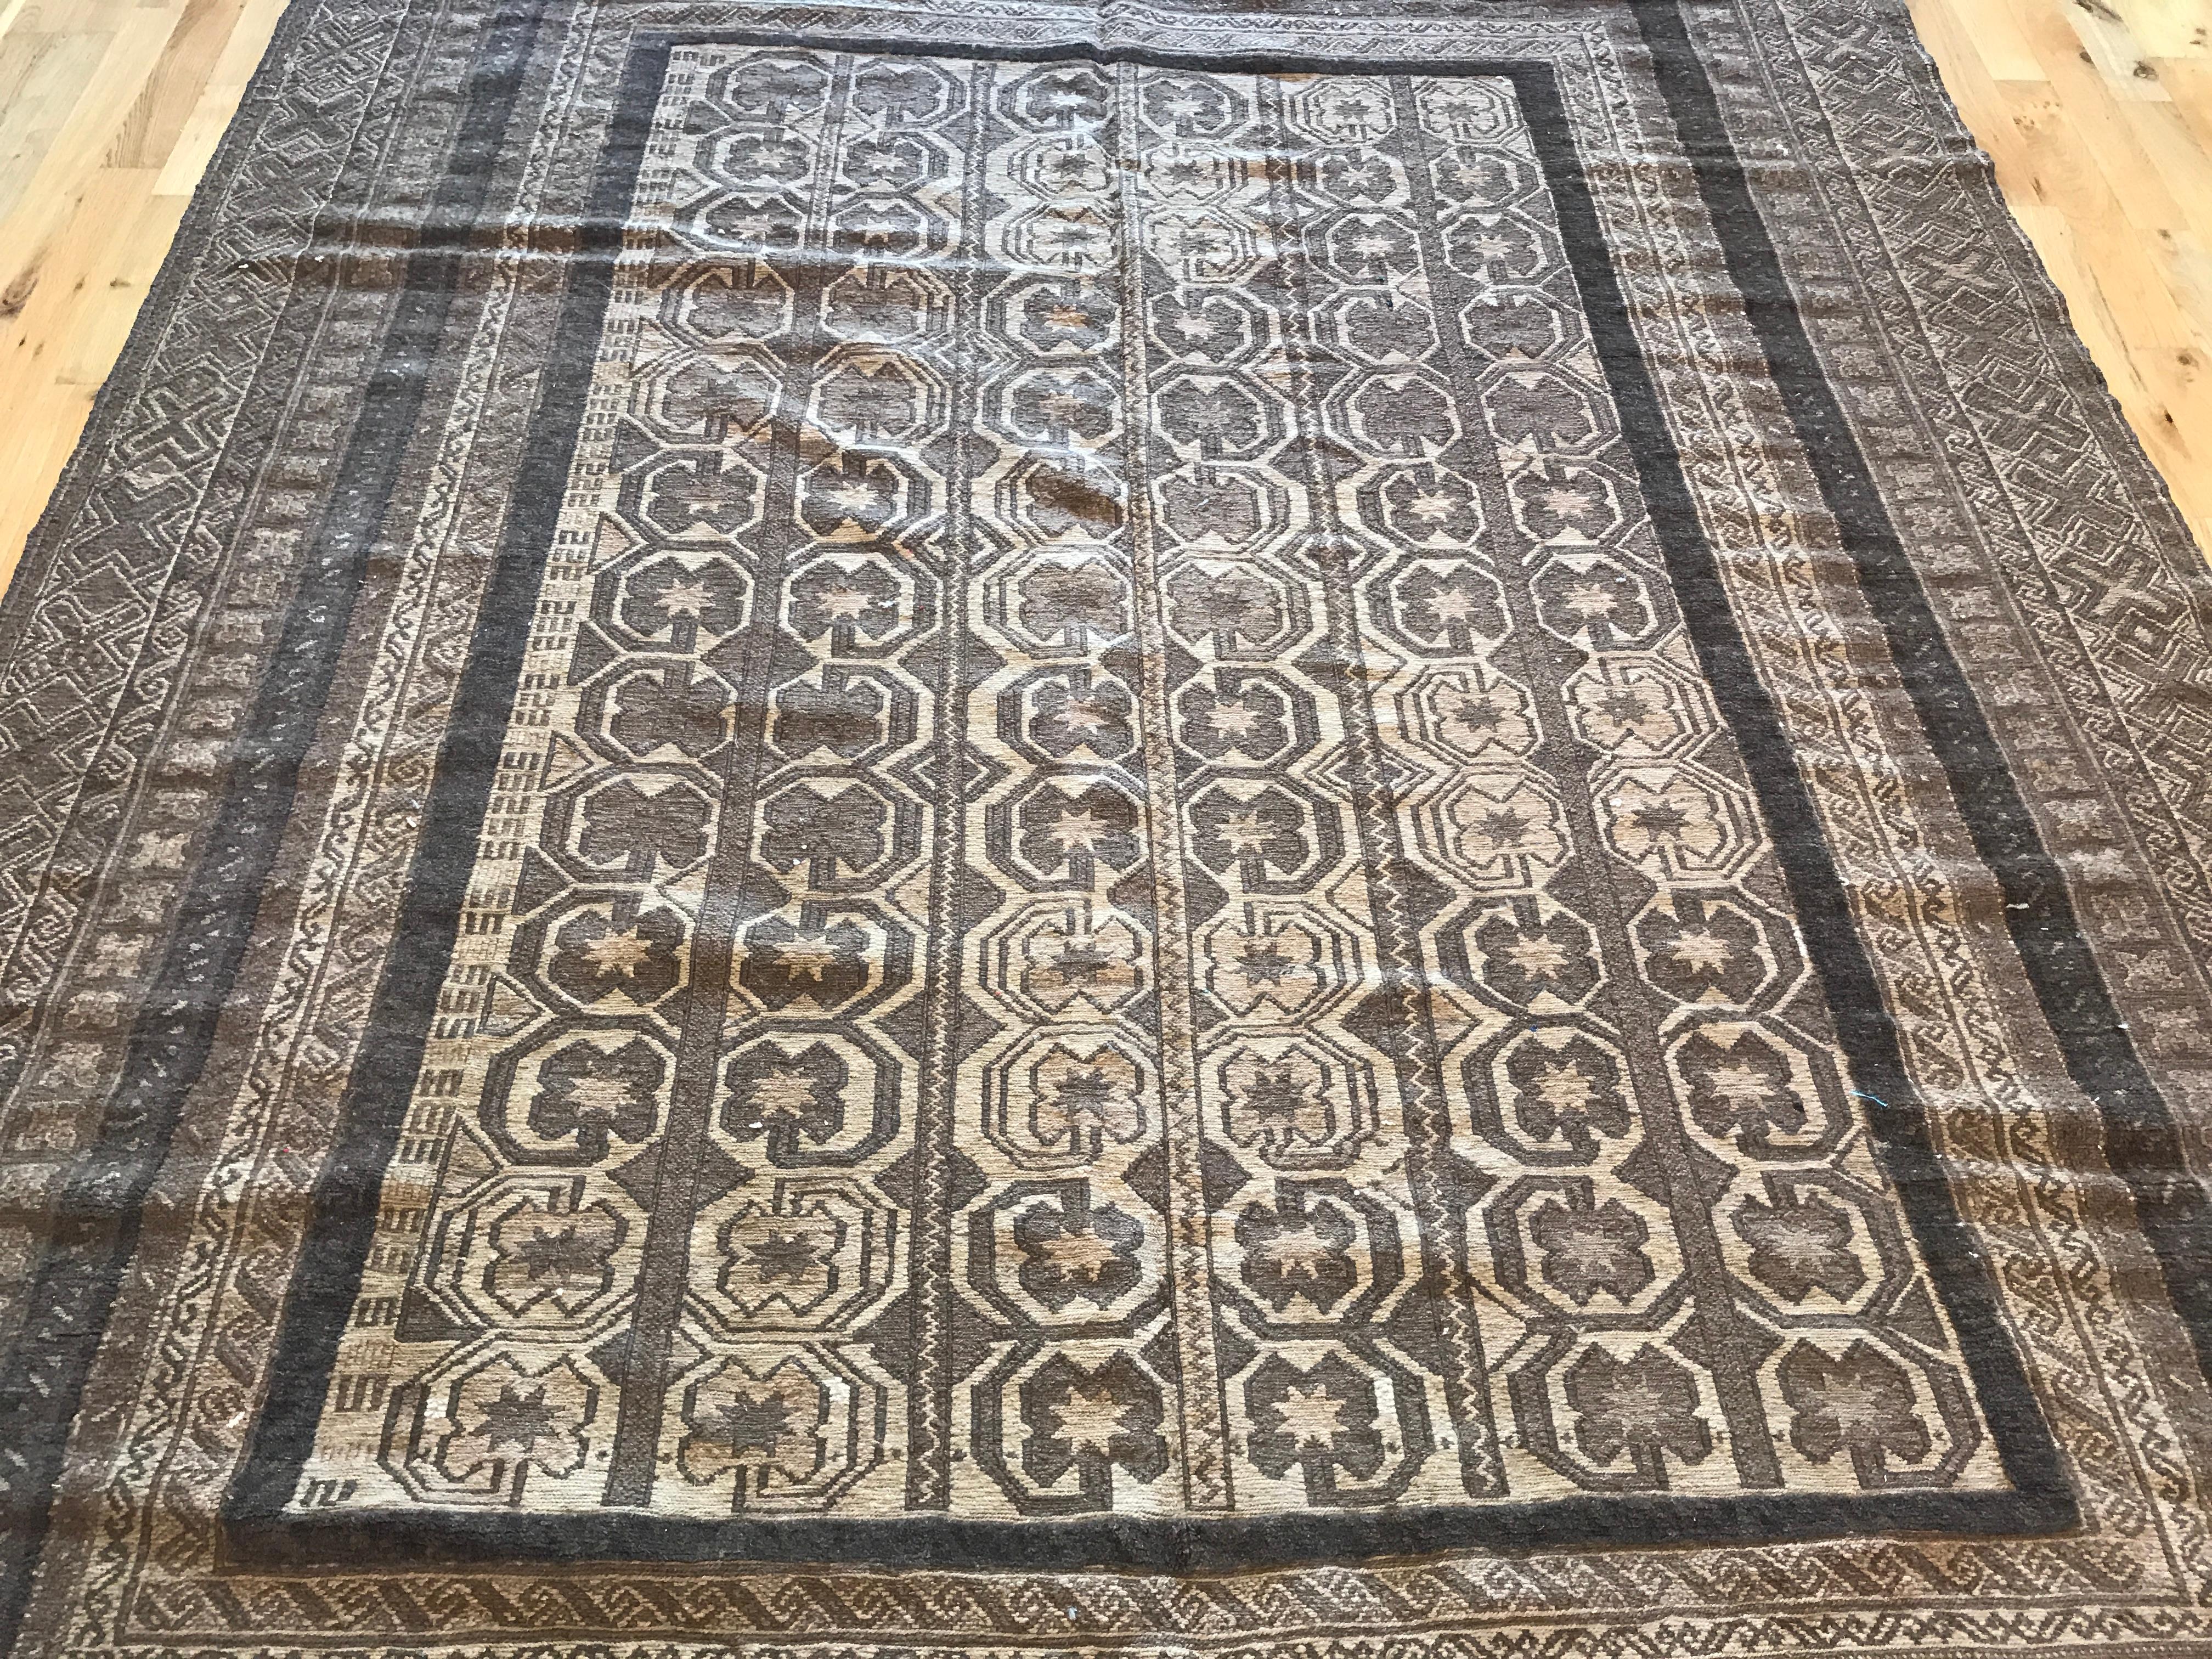 Antique Afghan rug. Measures: 6'5